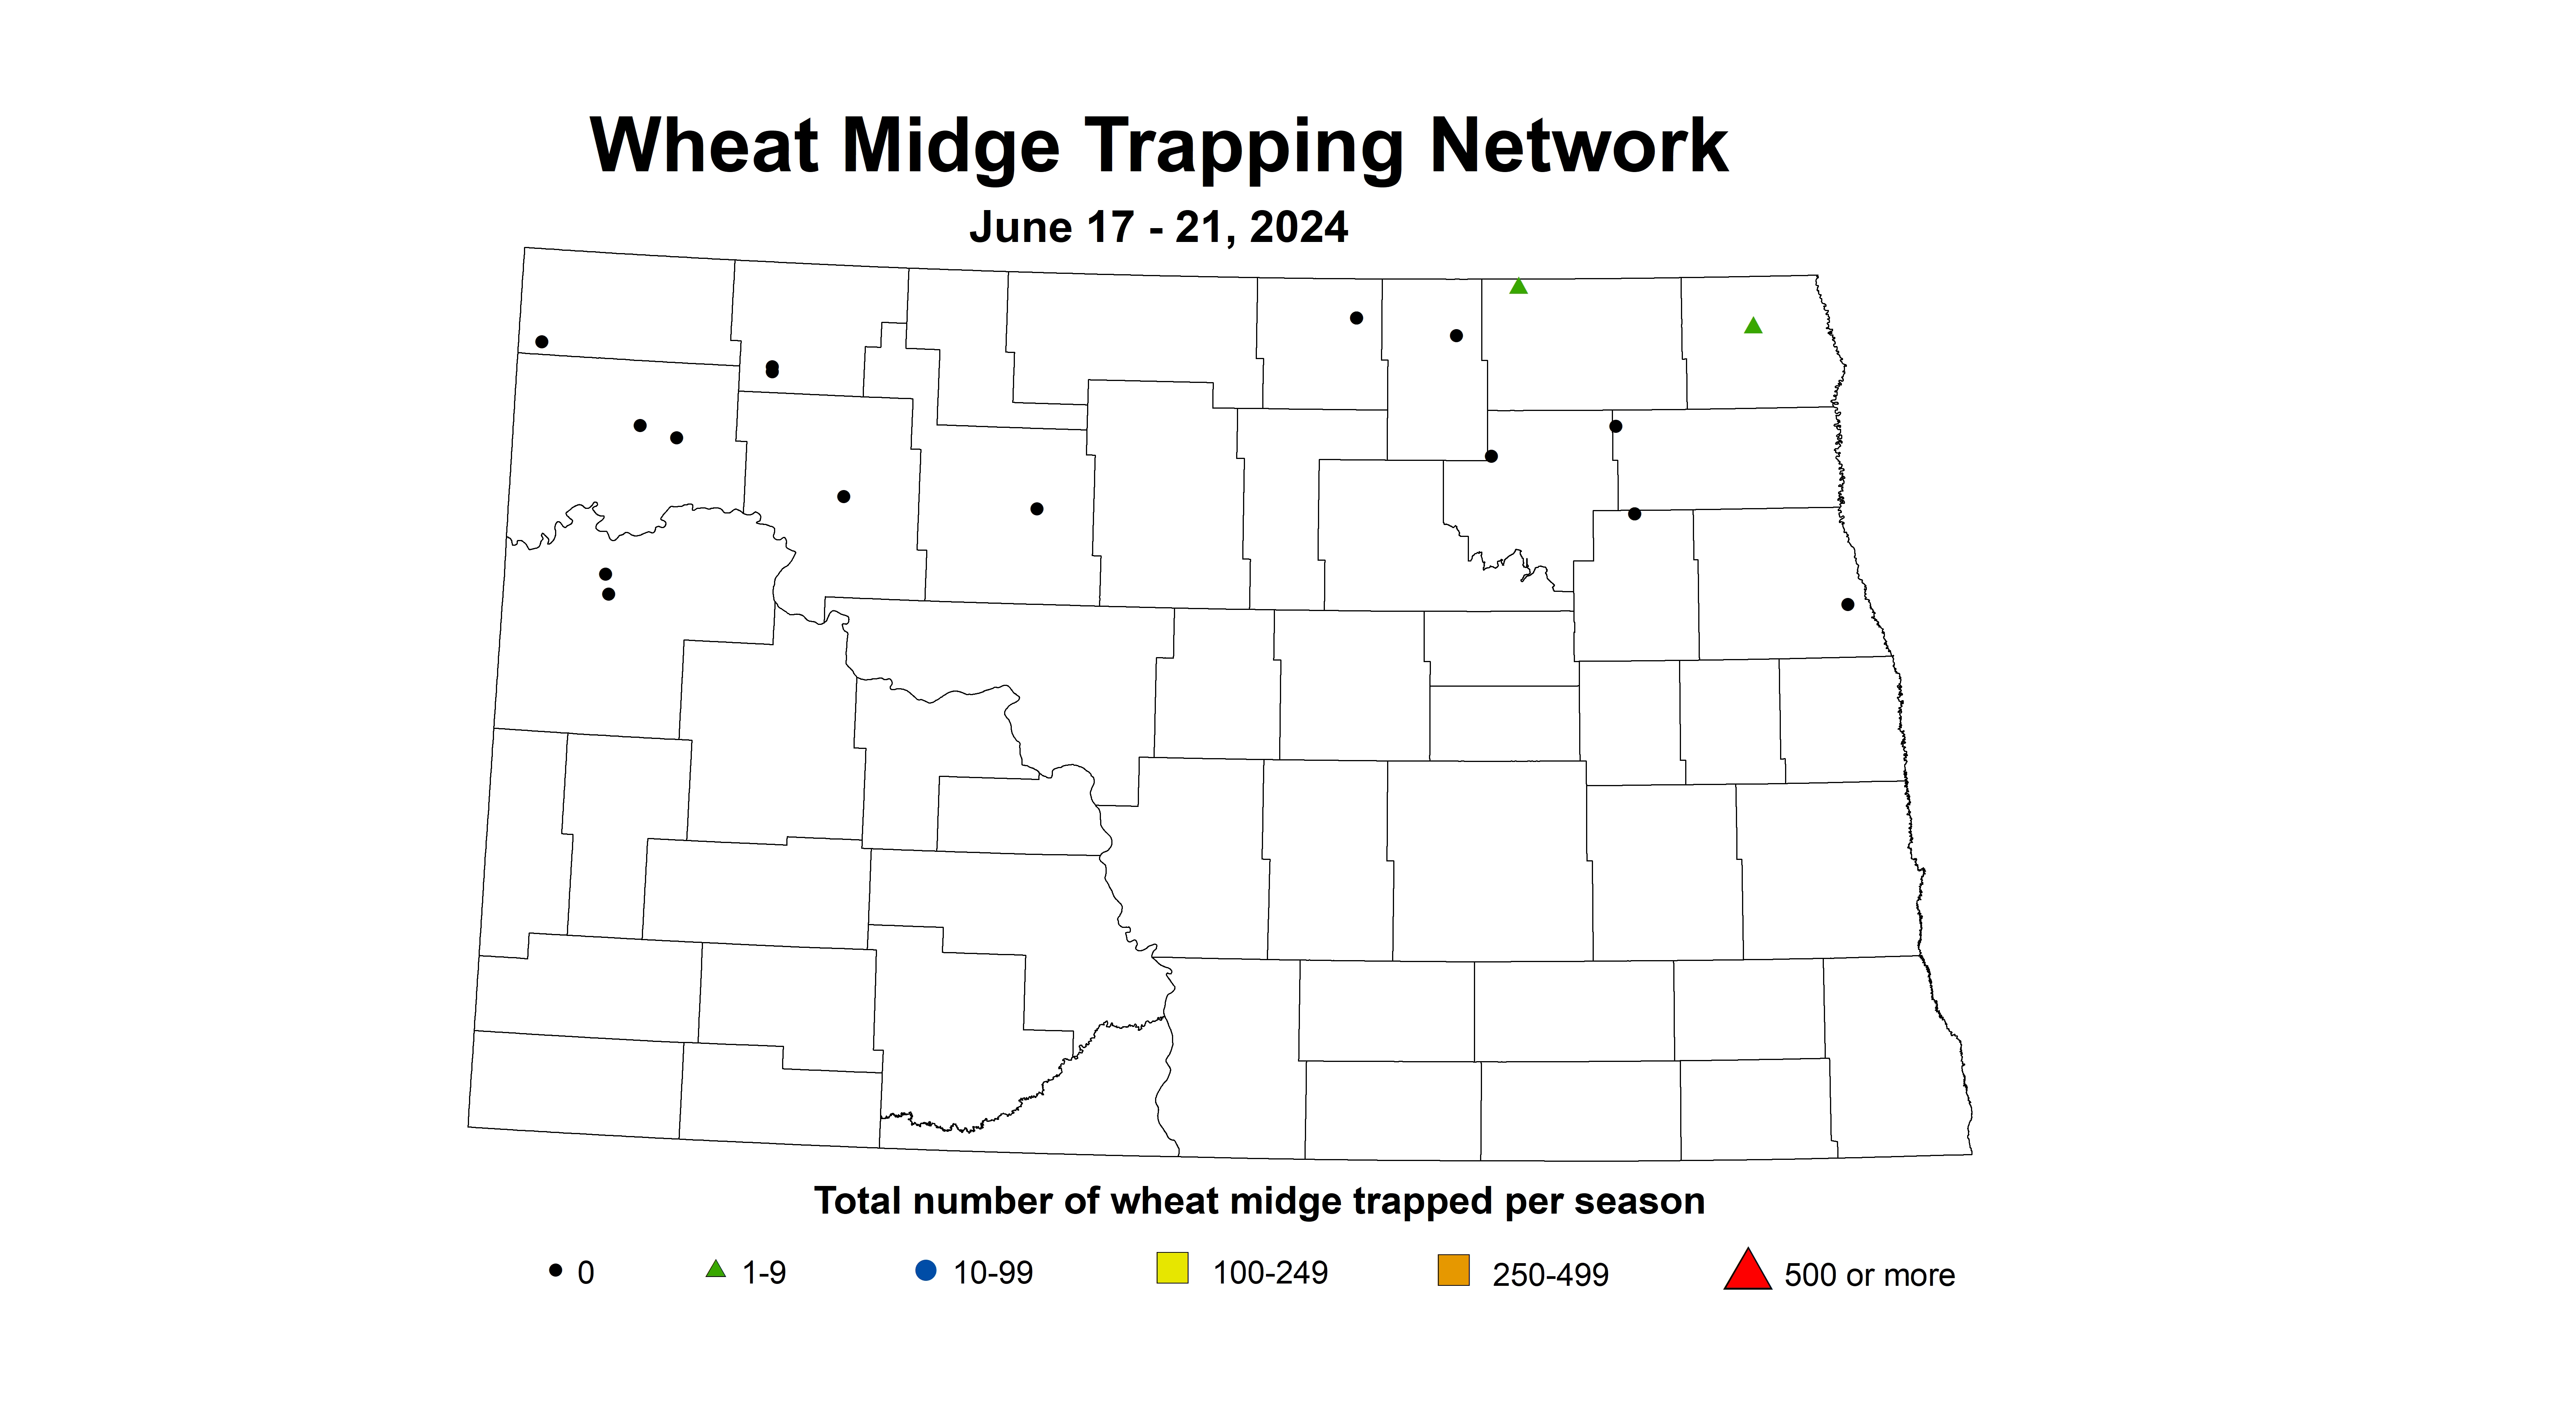 wheat midge trap total number June 17-21 2024